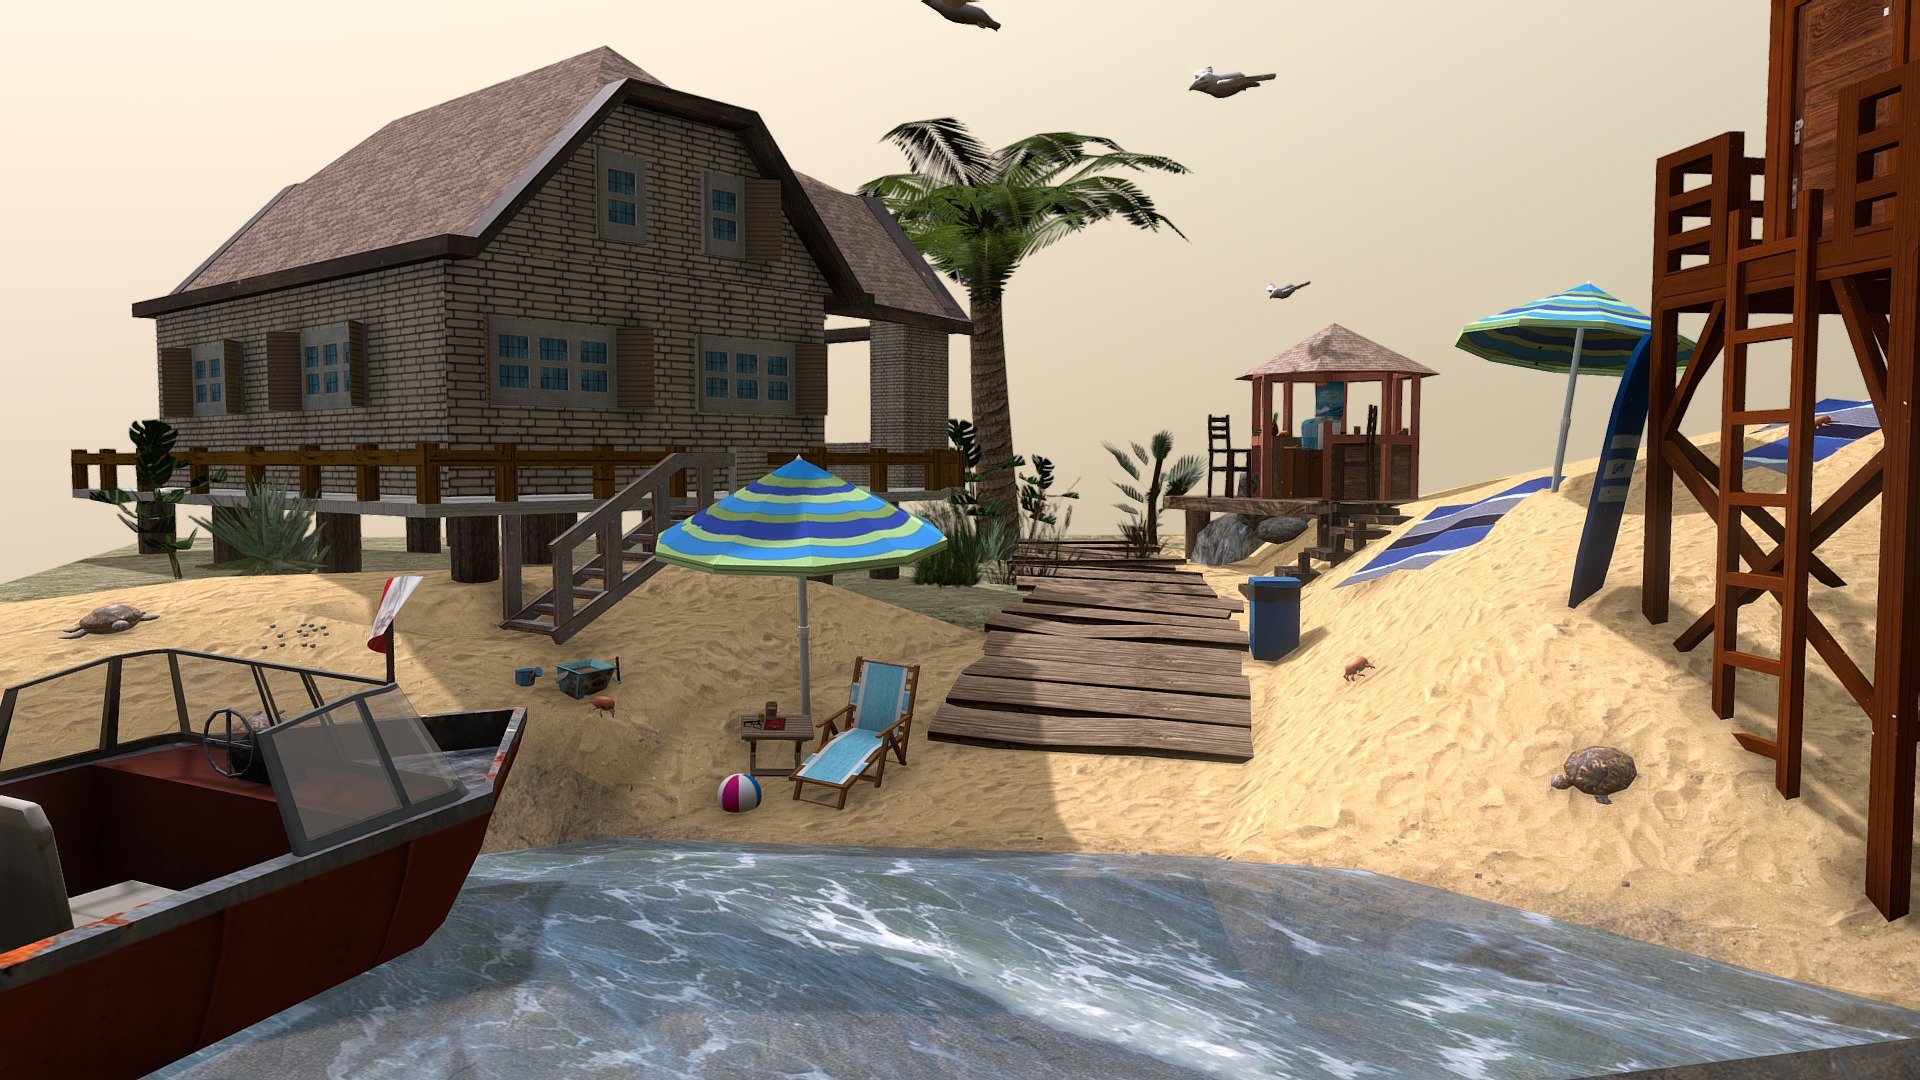 Beach diorama made for DAE 3D1 final assignment 3d model